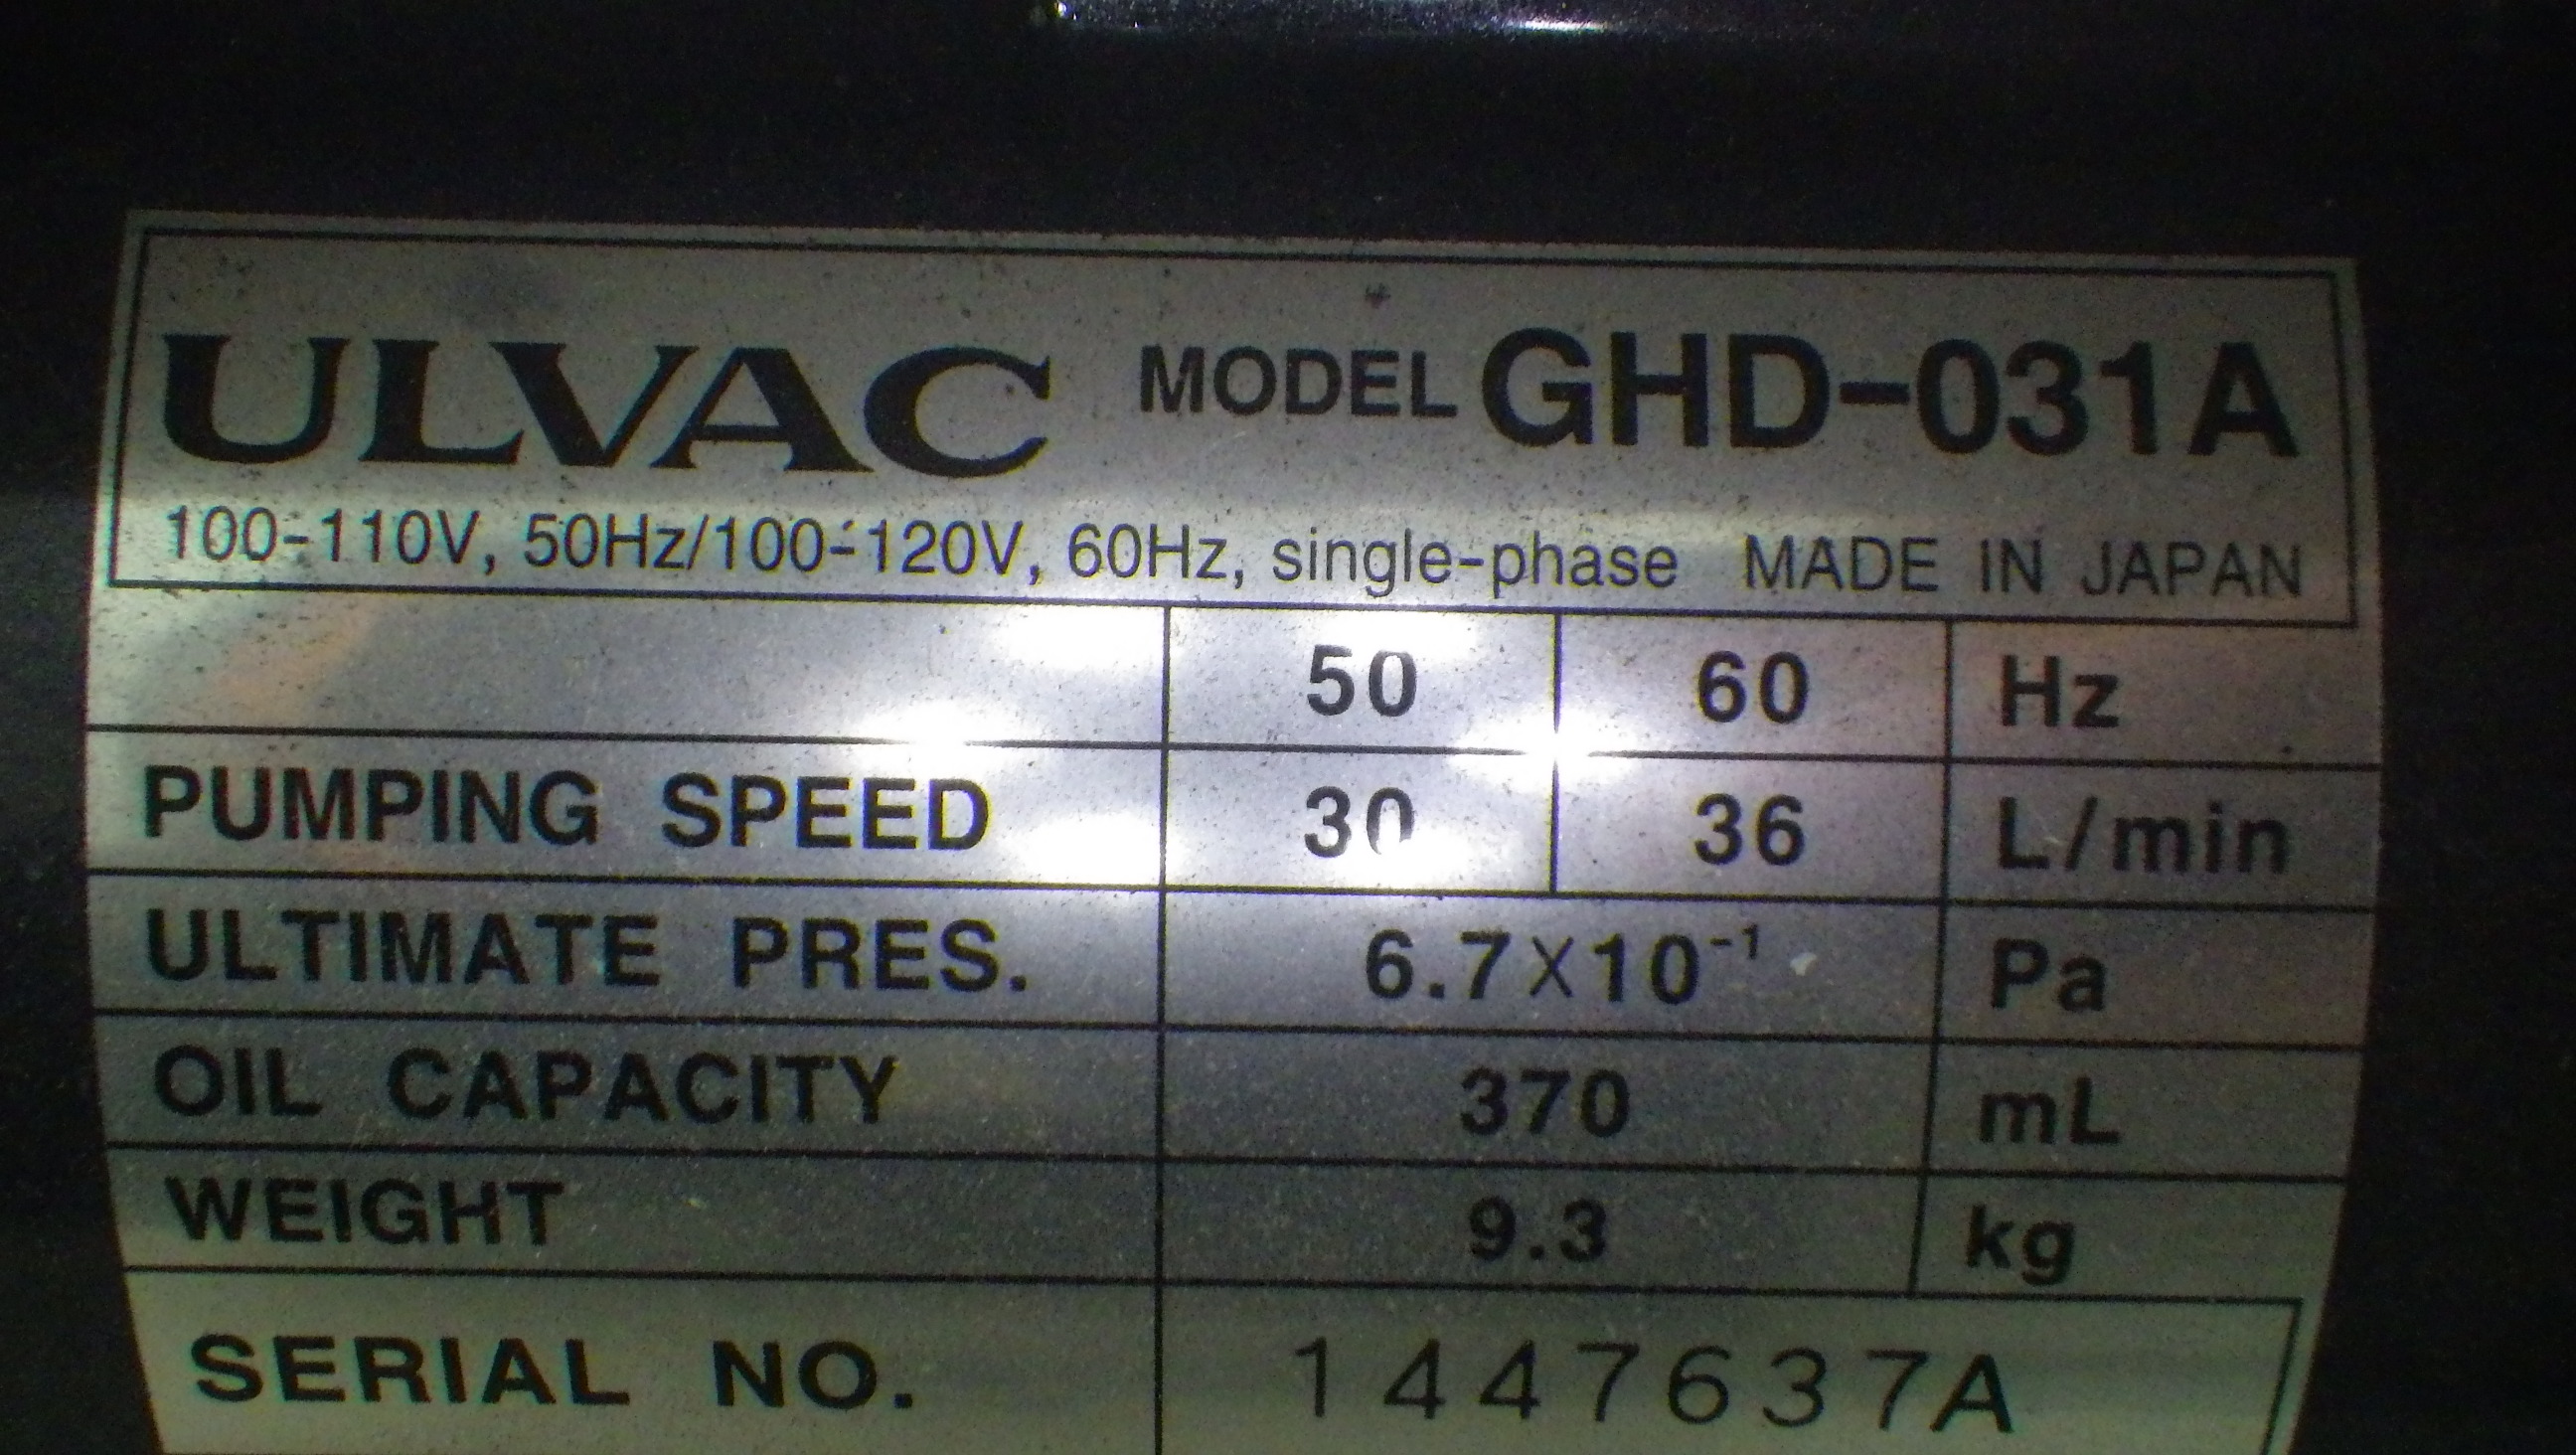 GHD-031Aの名盤写真